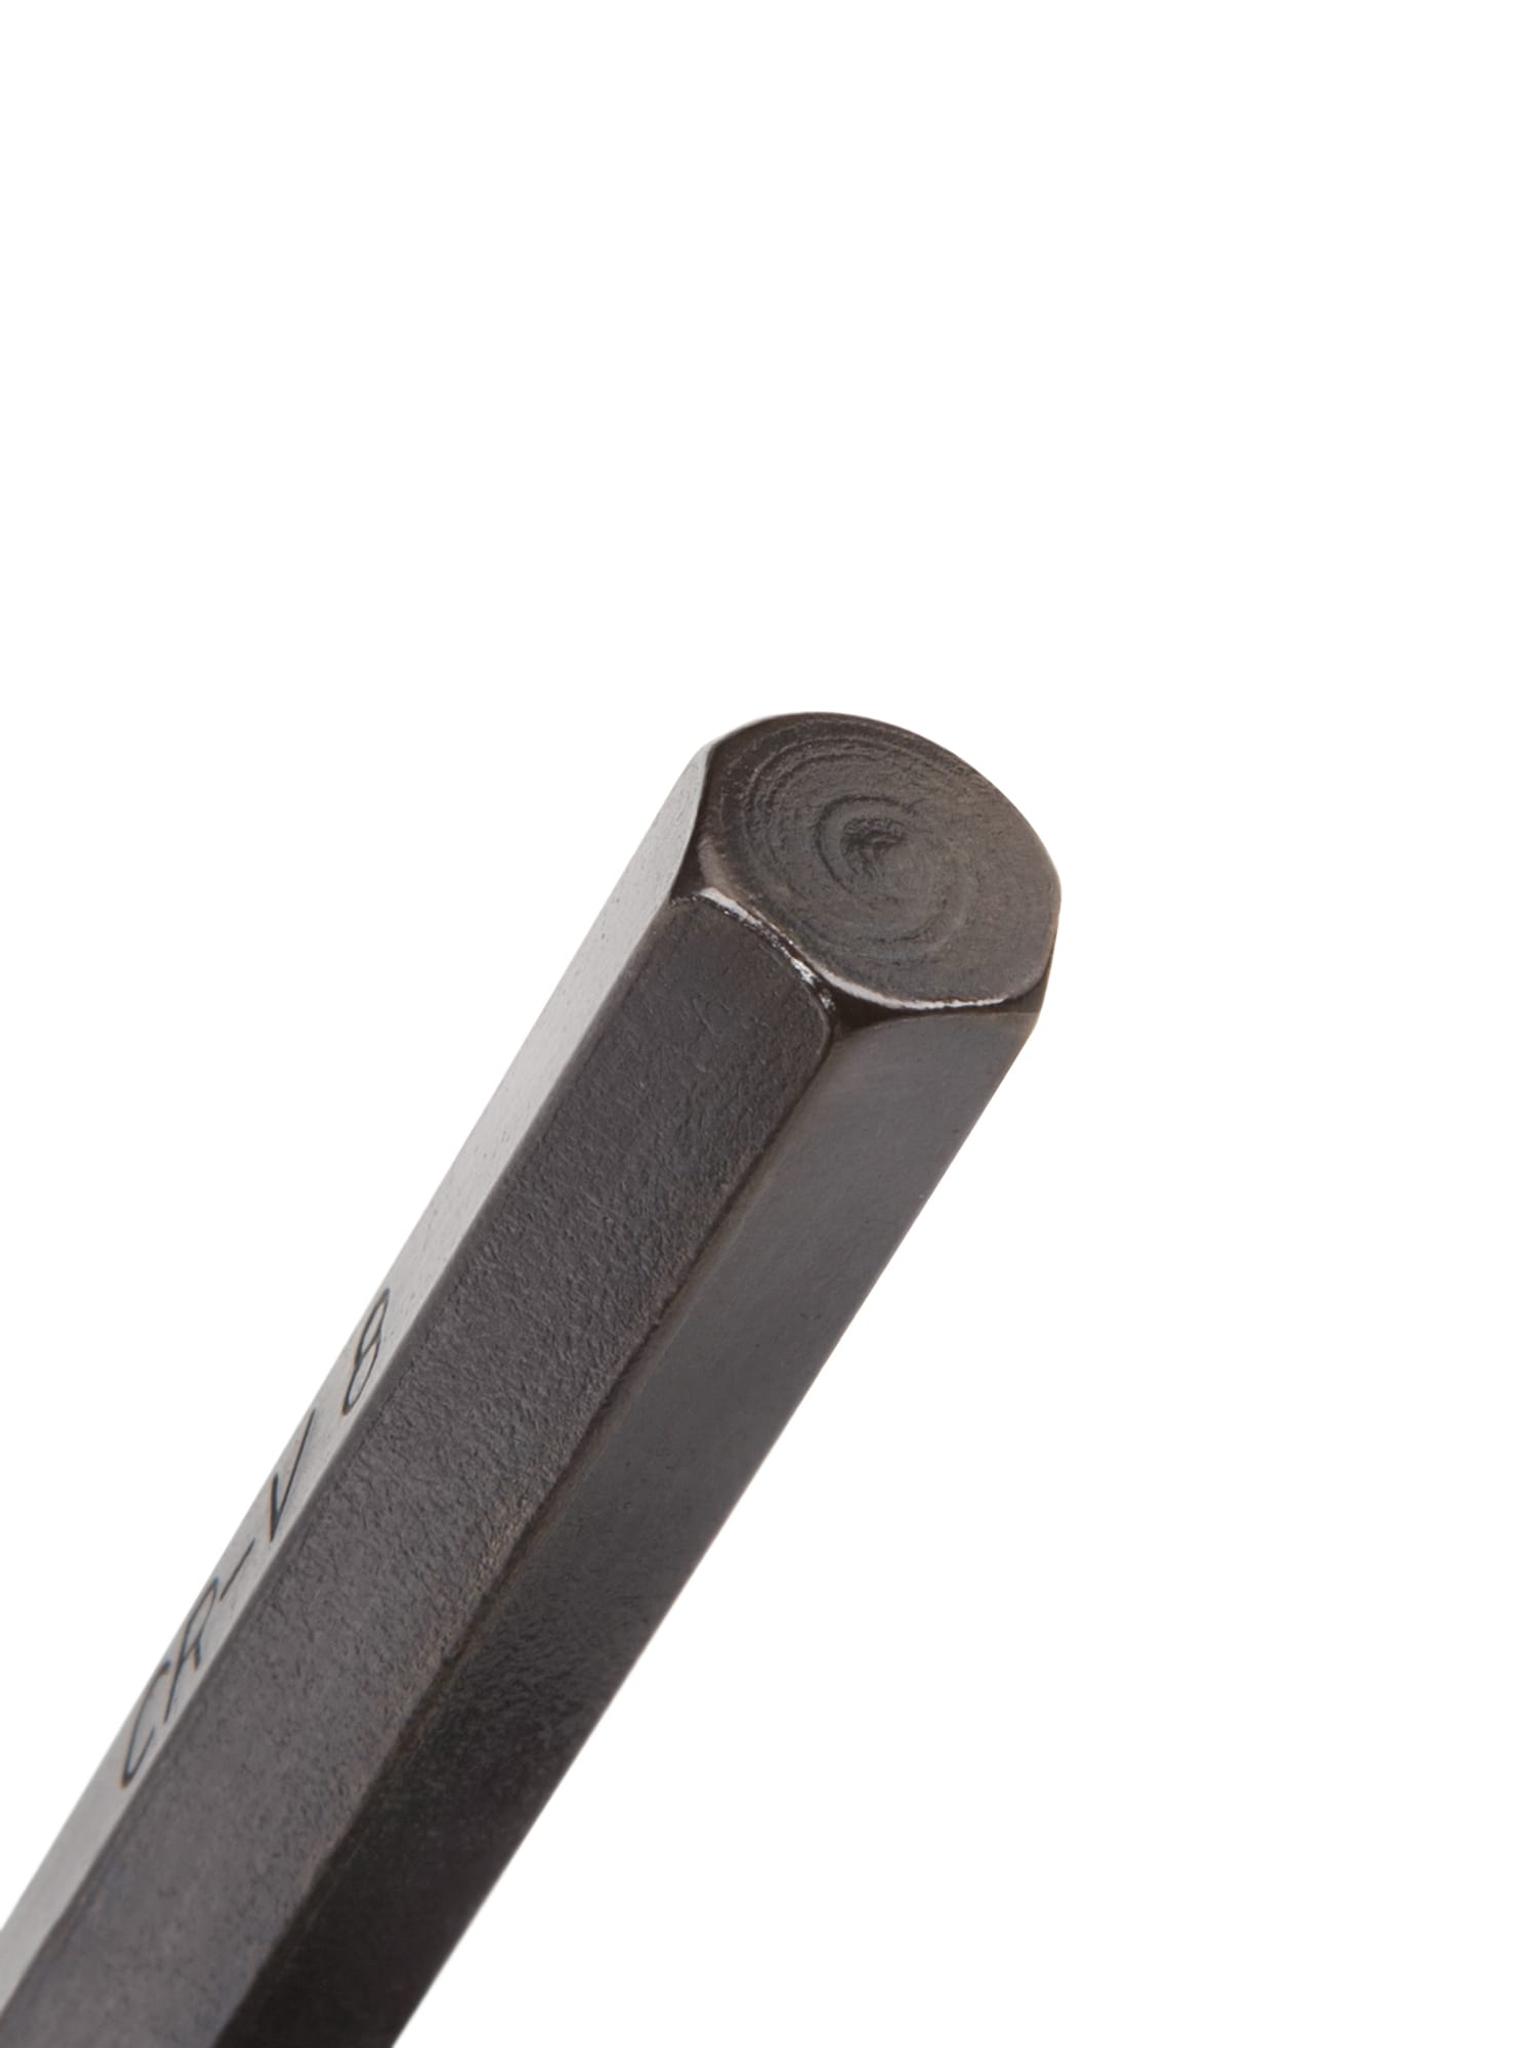 TEKTON 25142 Folding Hex Key Wrench Set, 8-Piece (1.5-8 mm)